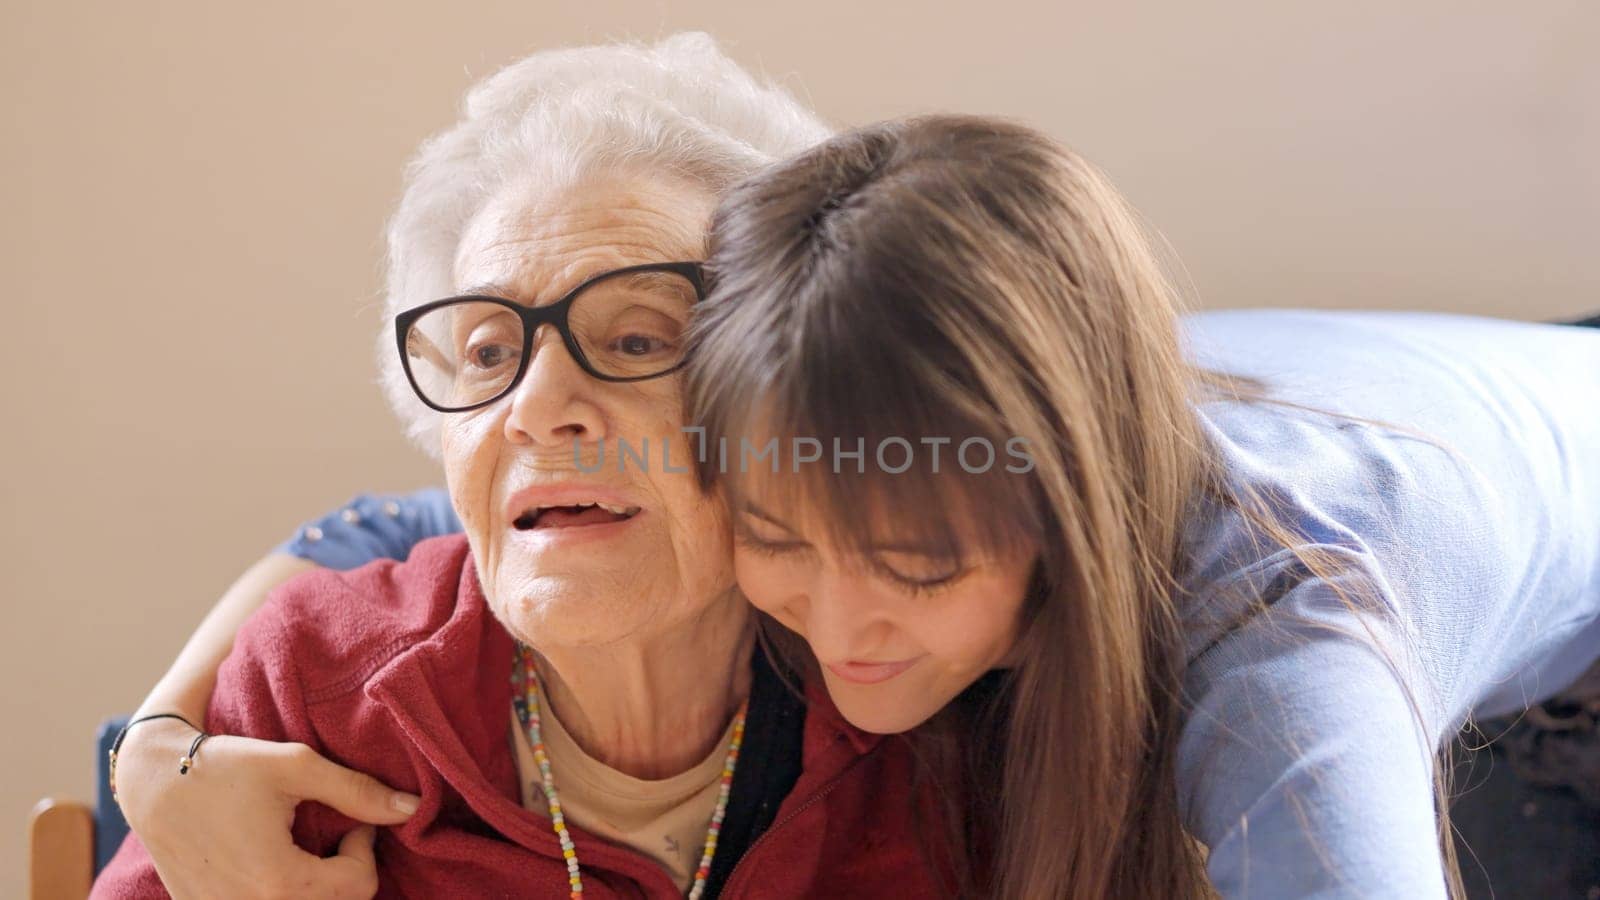 Cute granddaughter embracing her grandmother in a geriatric